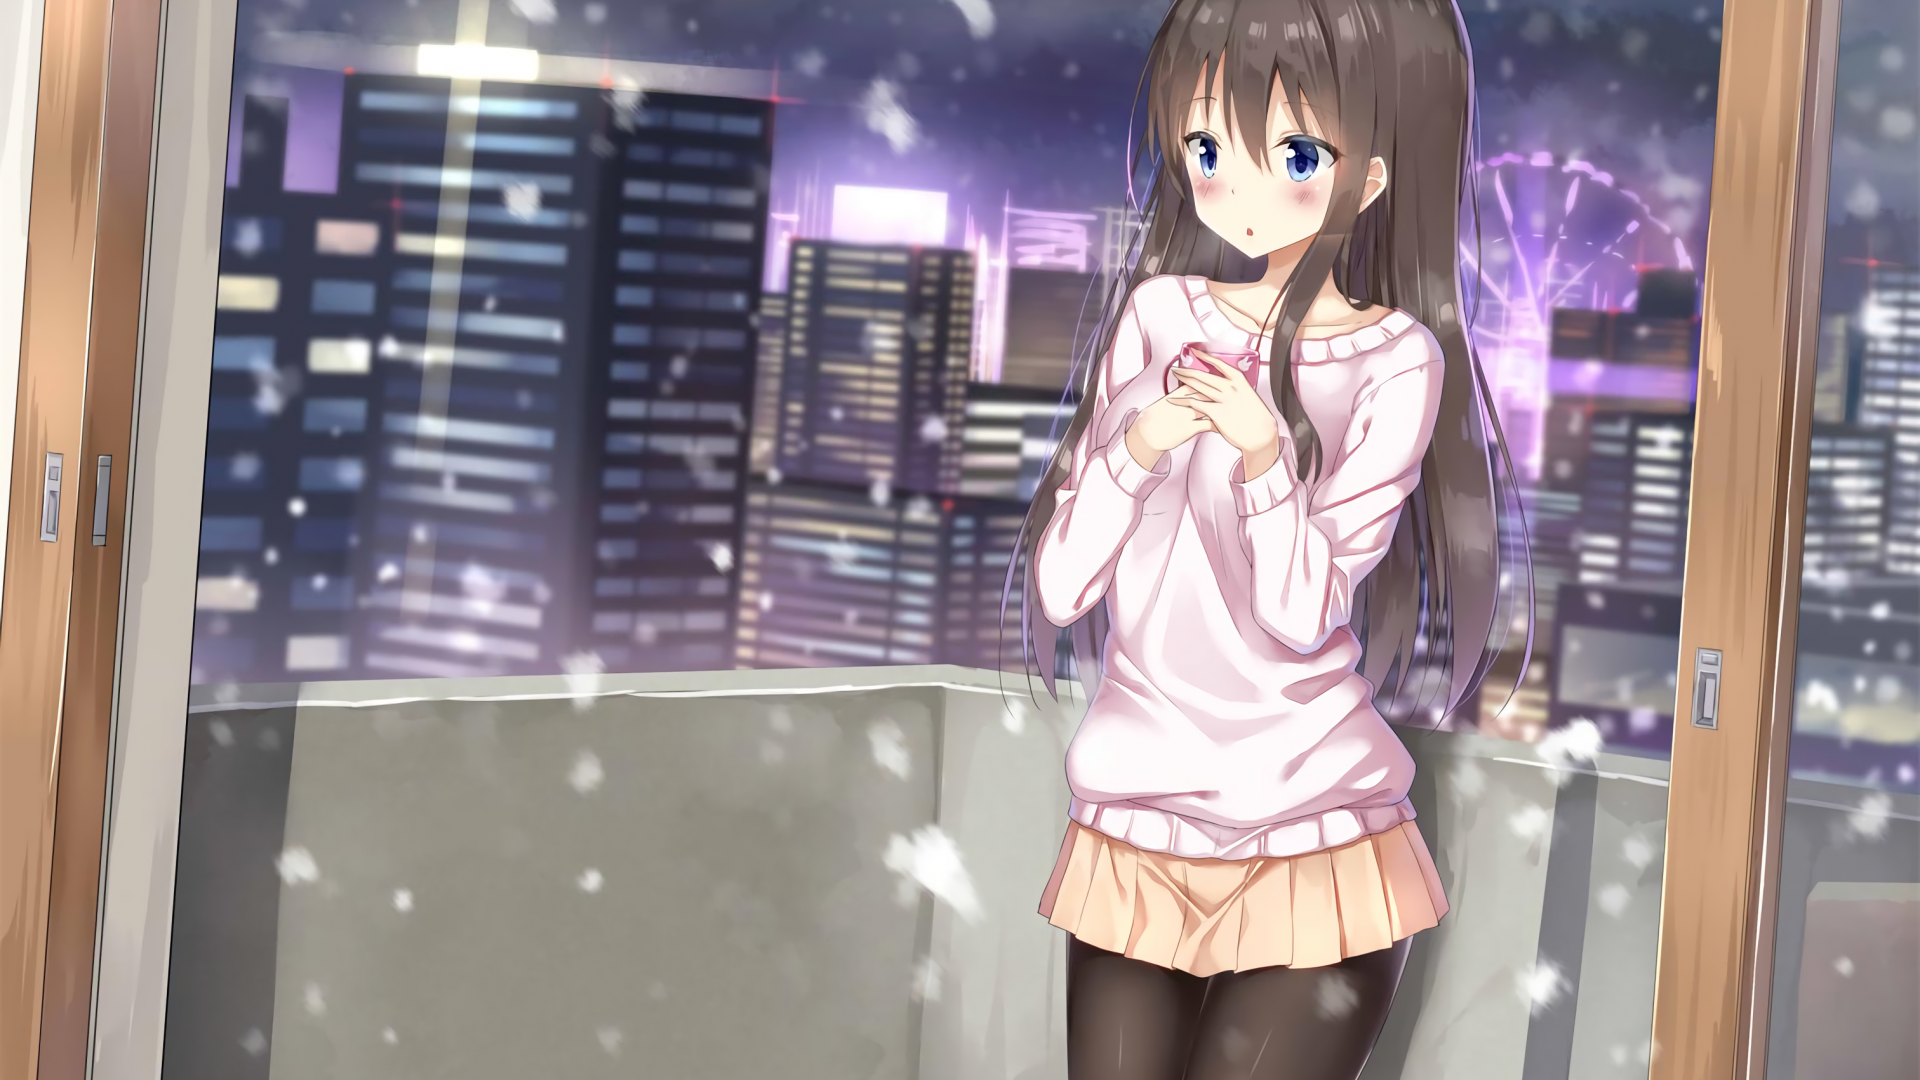 Wallpaper Cute long hair anime girl enjoying snow fall